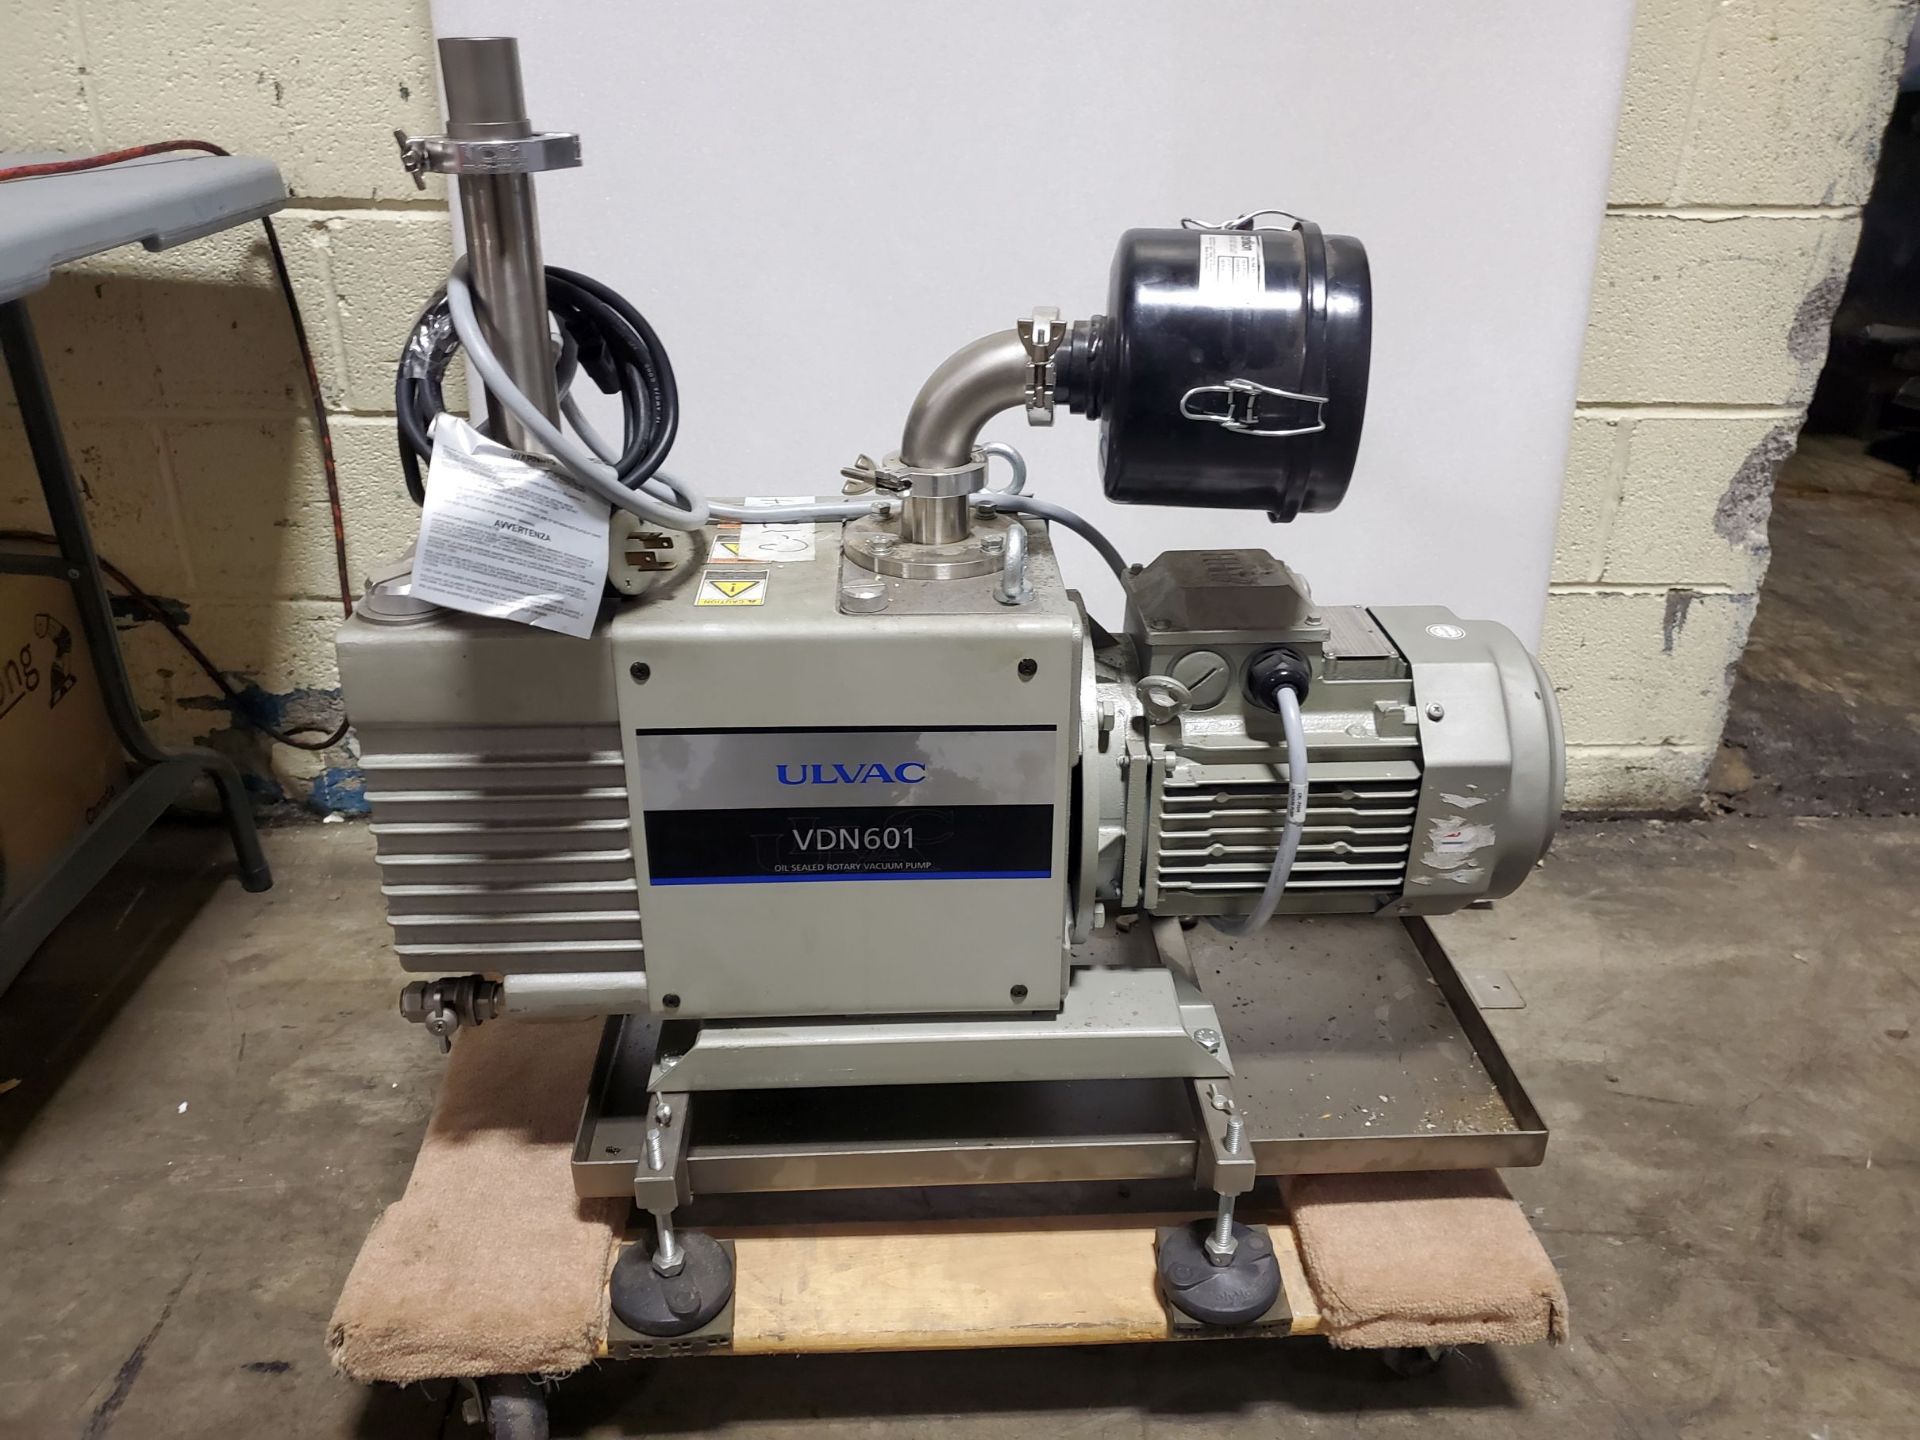 ULVAC Oil Sealed Rotary Vacuum Pump, Model VDN601 - Image 5 of 6